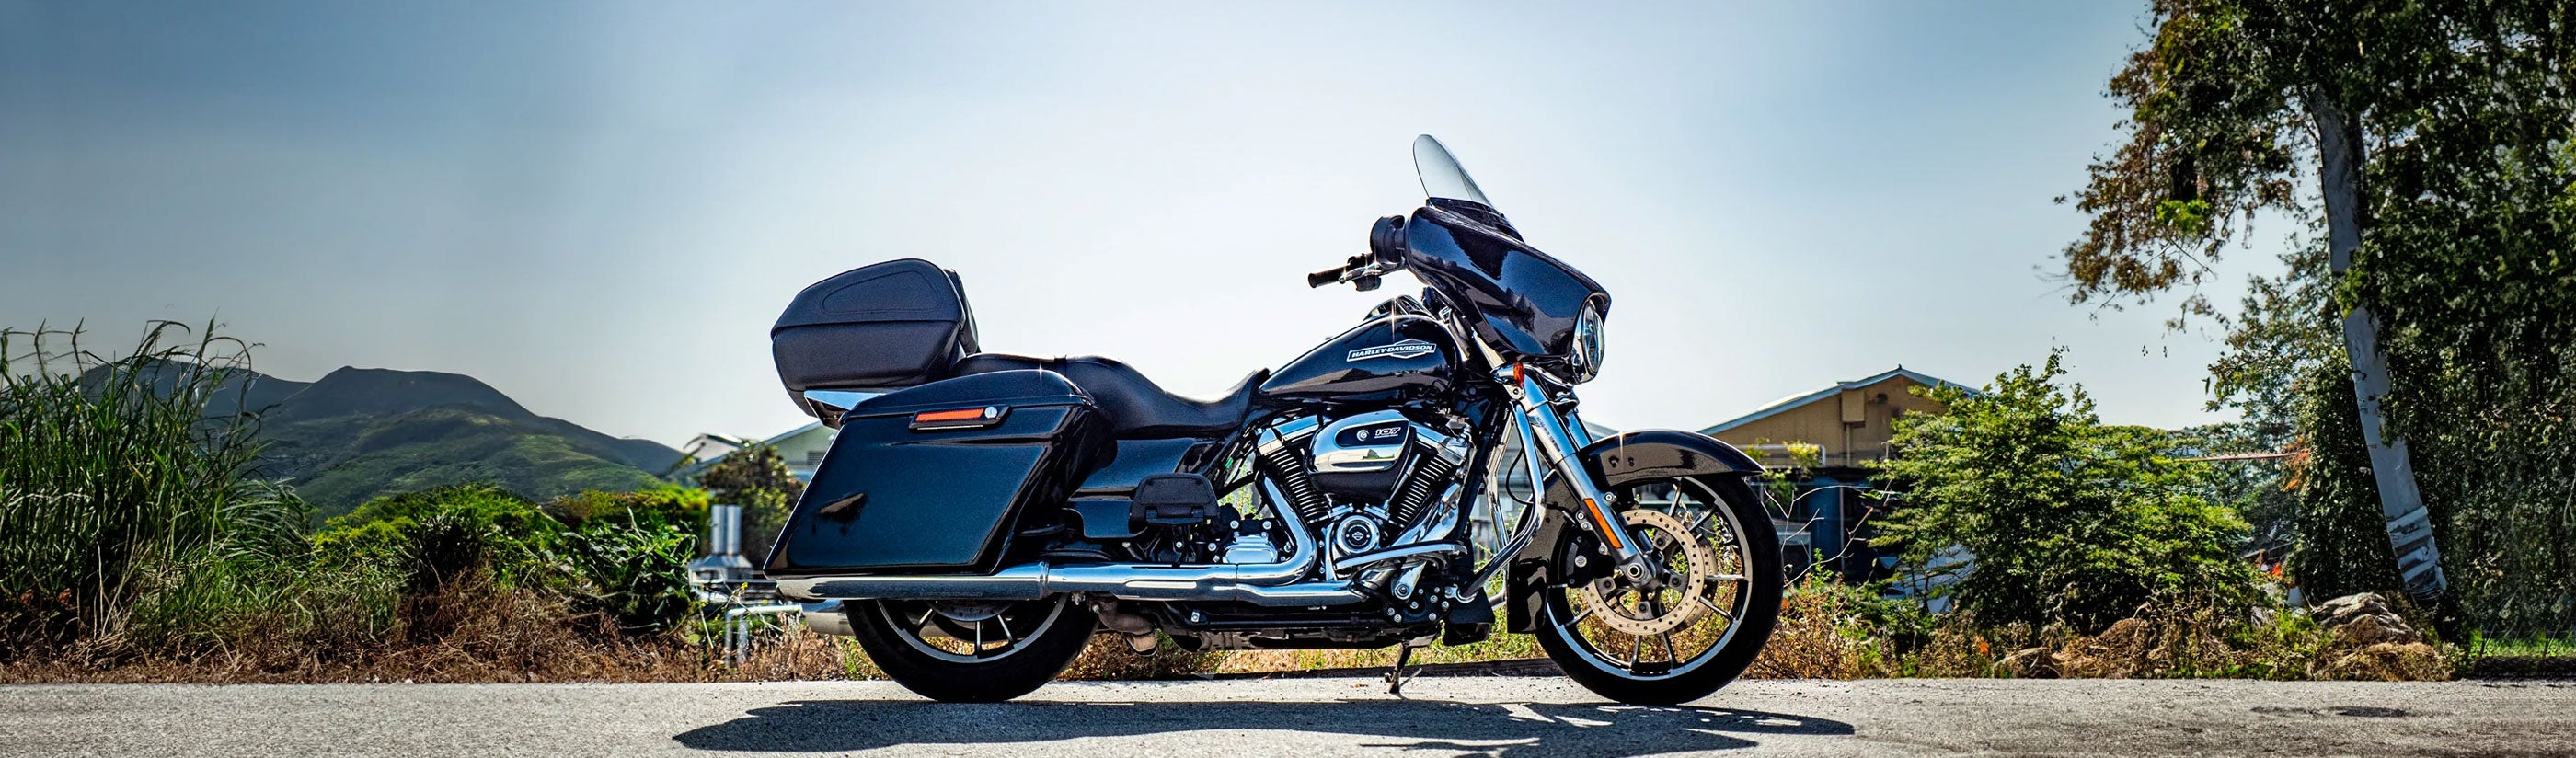 Harley Davidson Touring Street Glide FLHX Saddlebags 2014+